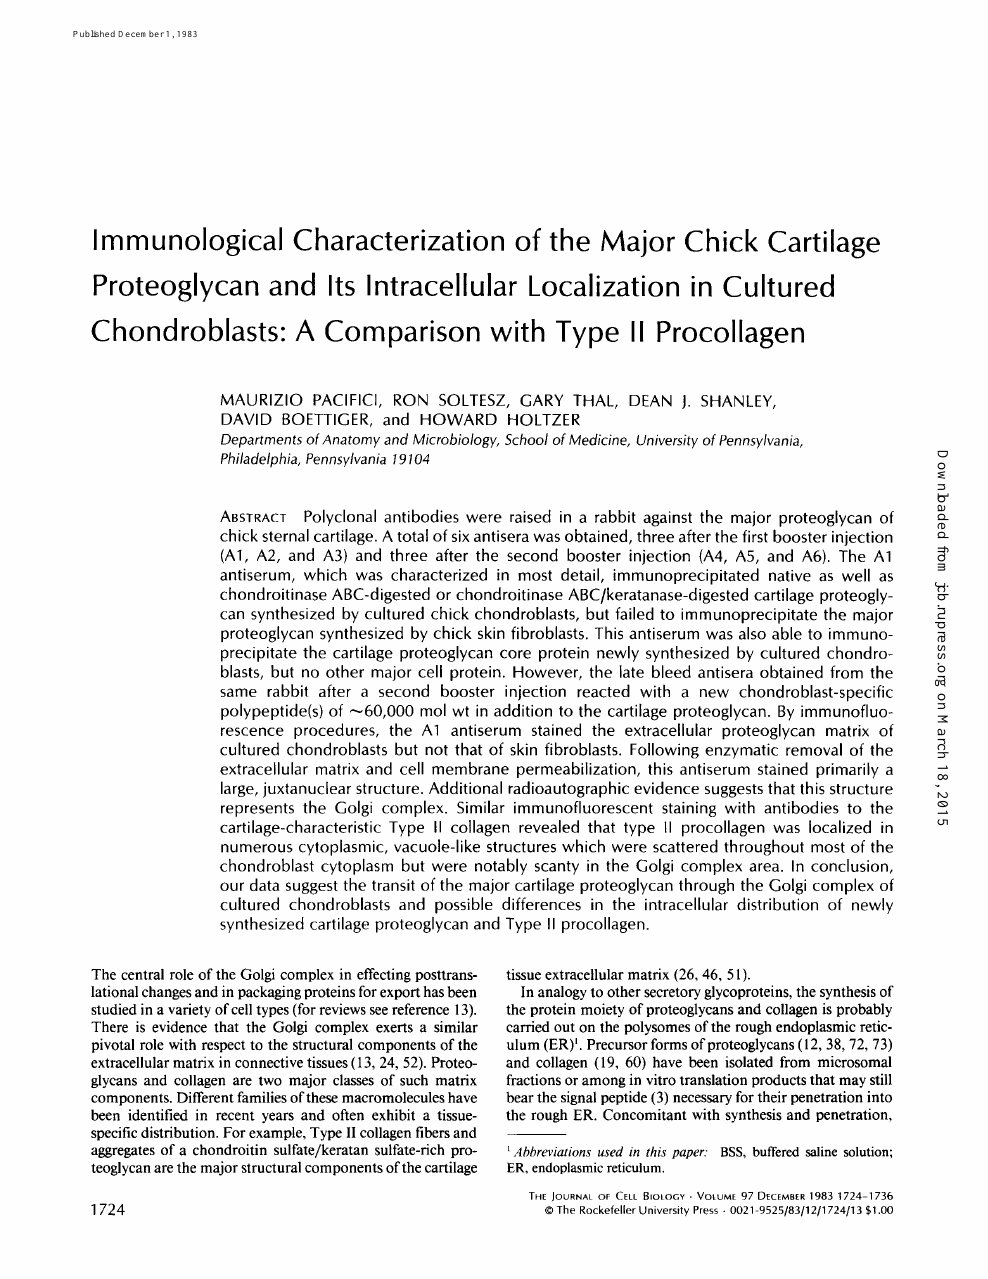 major chick cartilage proteoglycan 